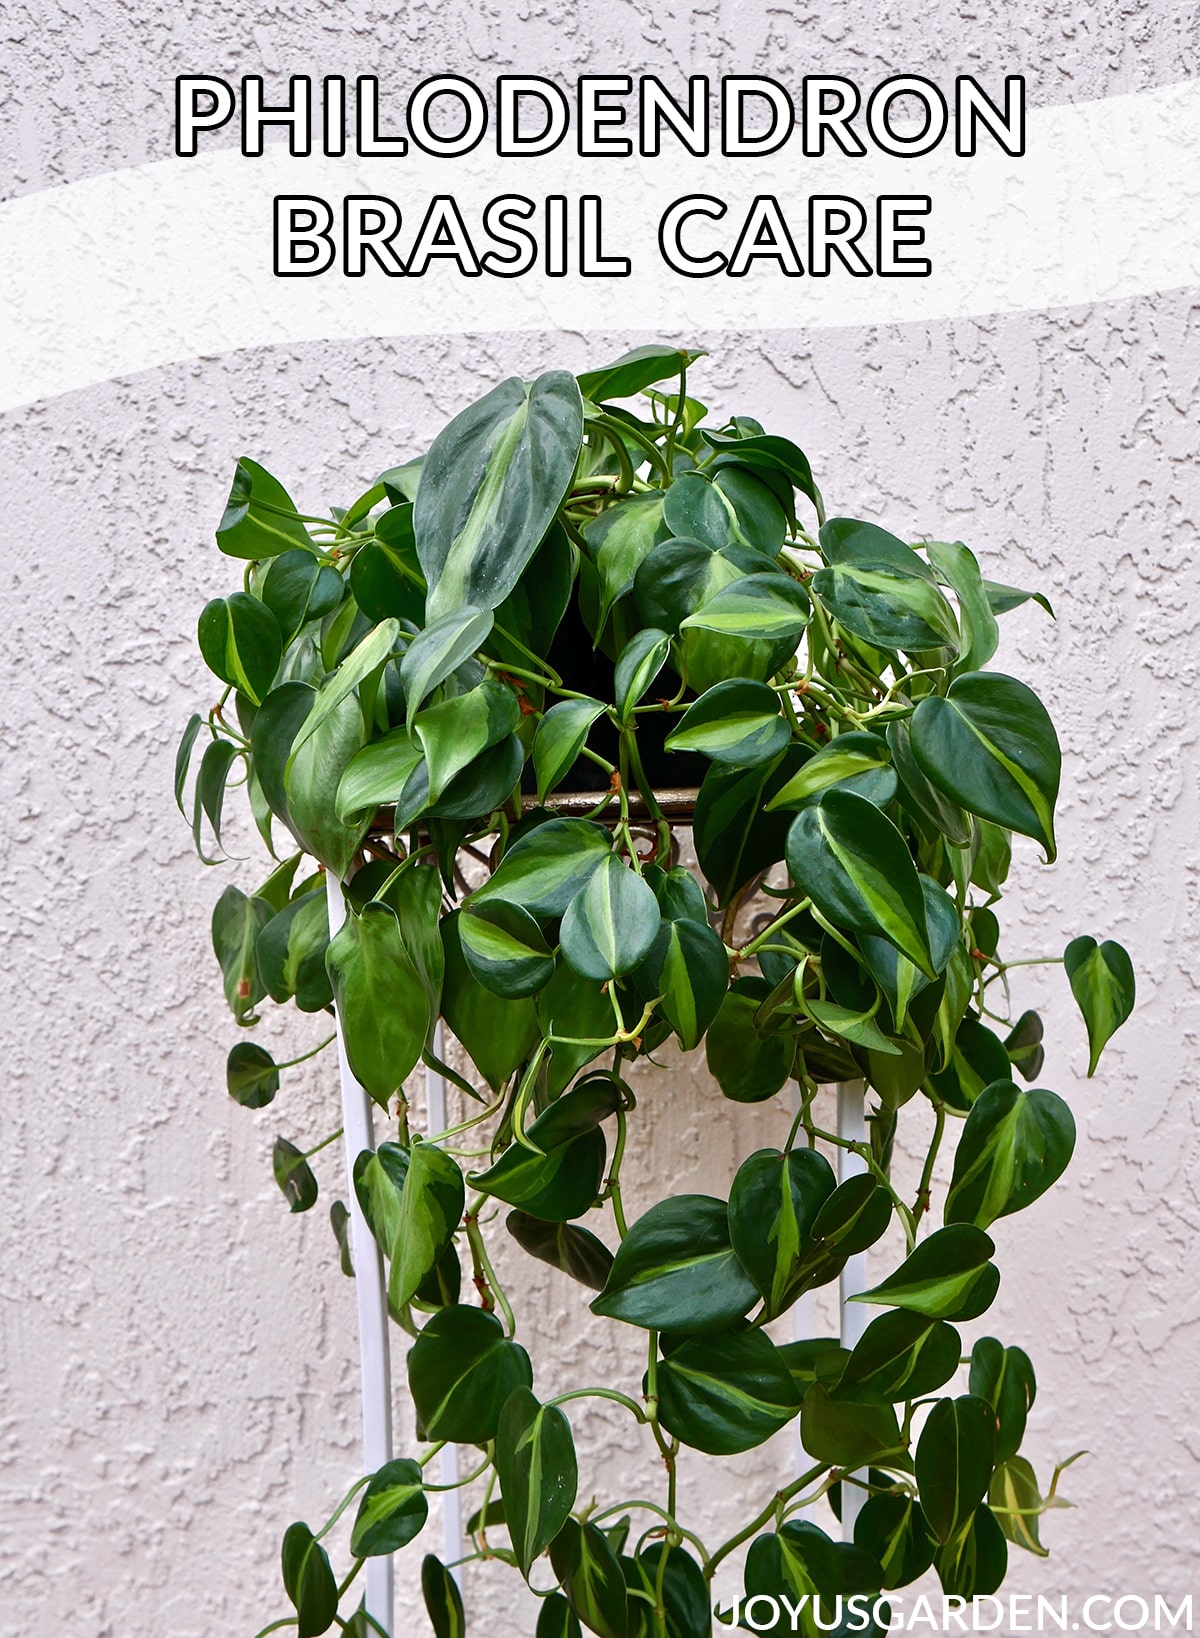  Philodendron Brasil စောင့်ရှောက်မှု- နောက်ကောက်ရလွယ်ကူသော အိမ်ပင်